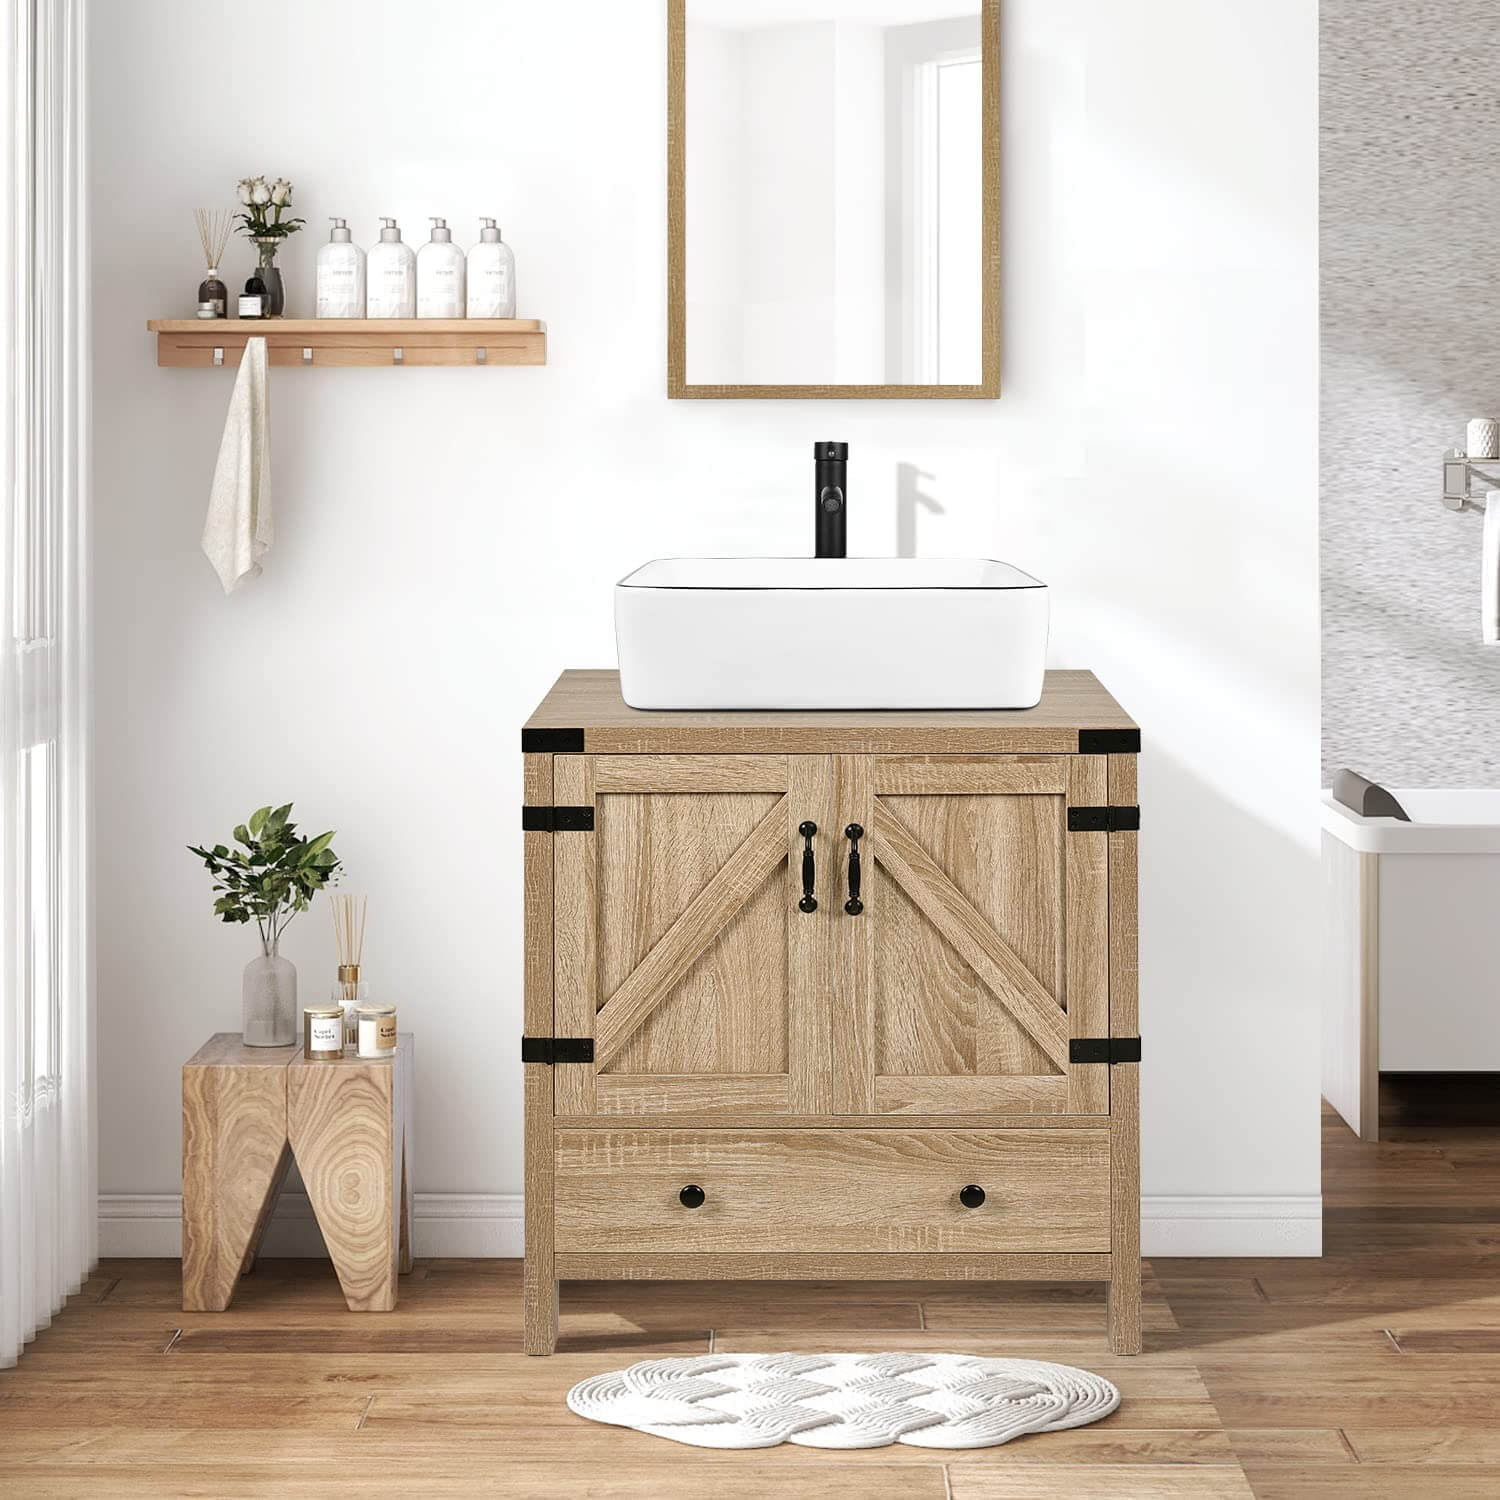 Elecwish 28" Bathroom Vanity Wood Fixture Stand Bathroom Cabinet With Sink display scene